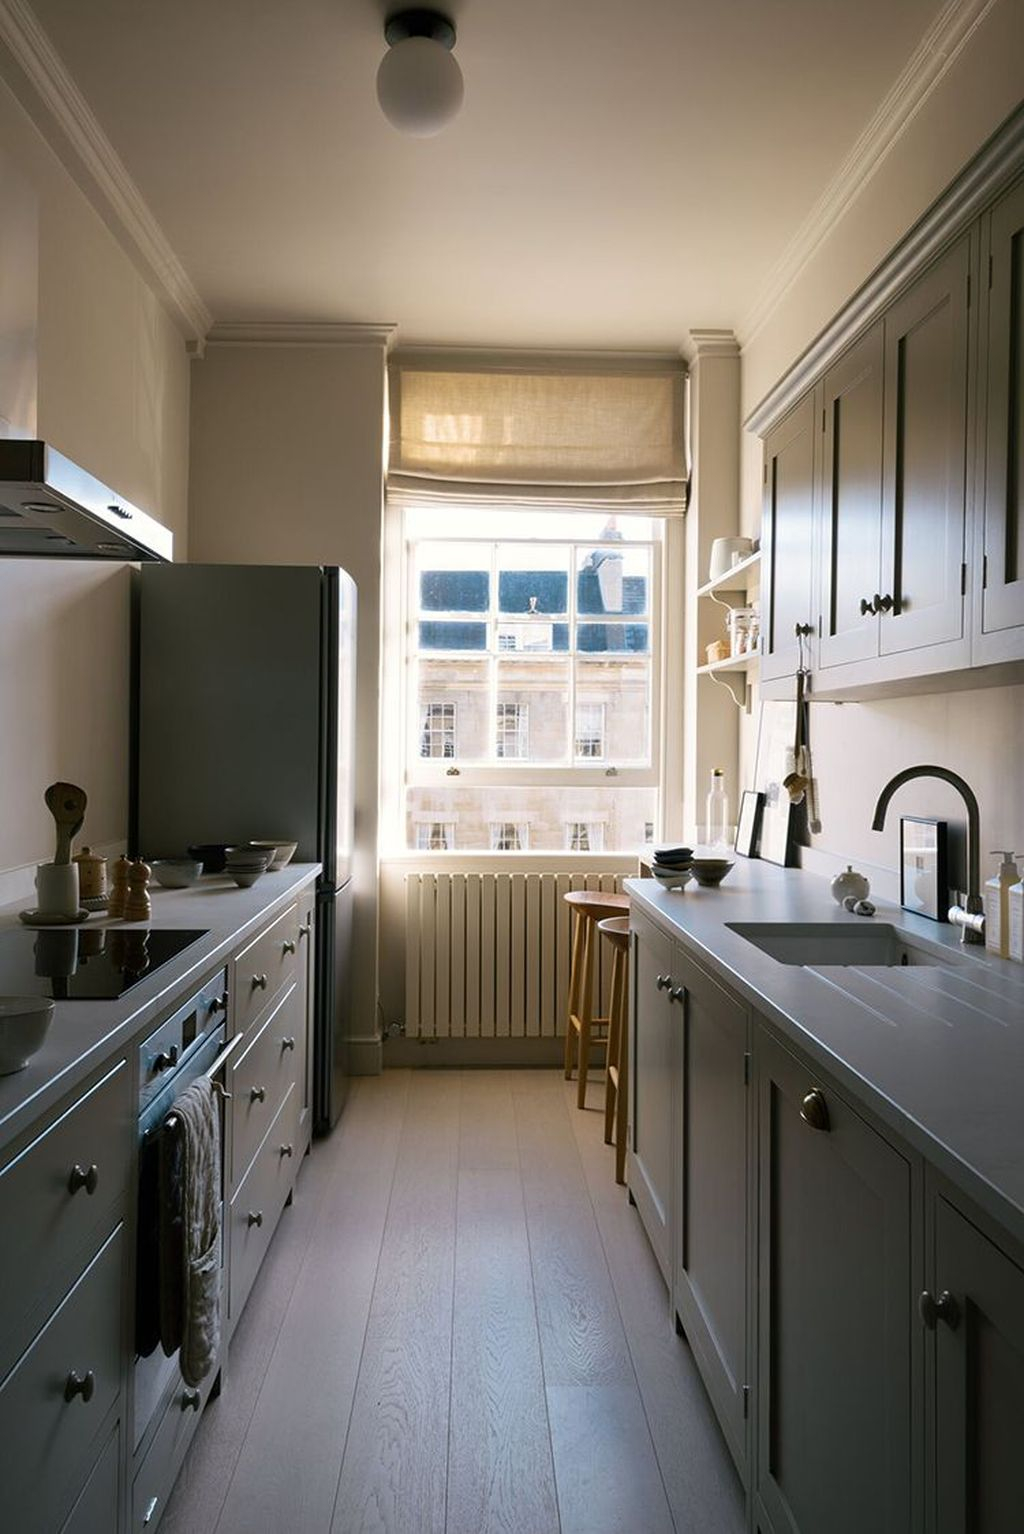 Brilliant Small Kitchen Remodel Design Ideas On A Budget 05